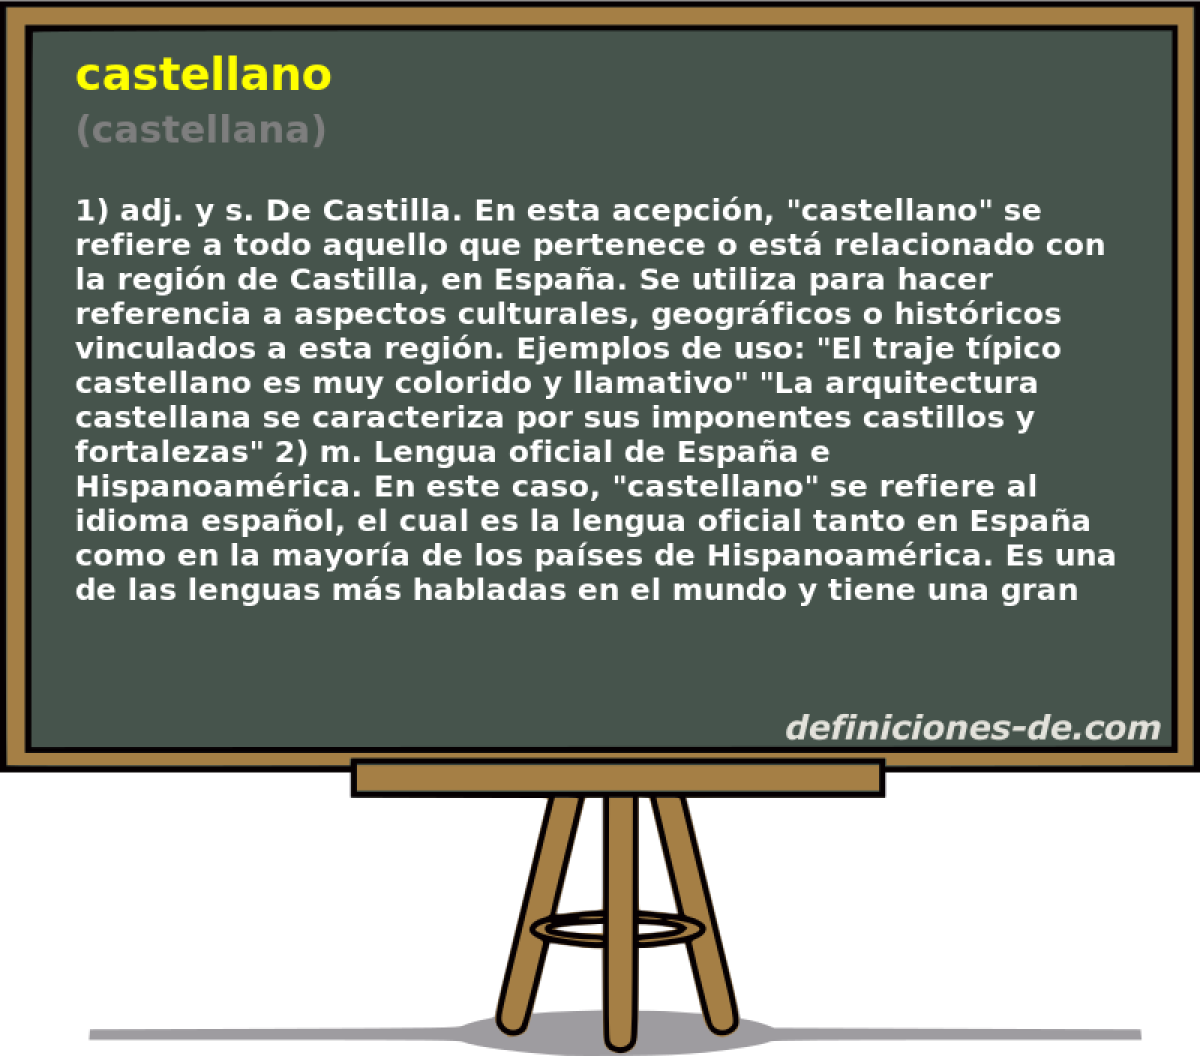 castellano (castellana)